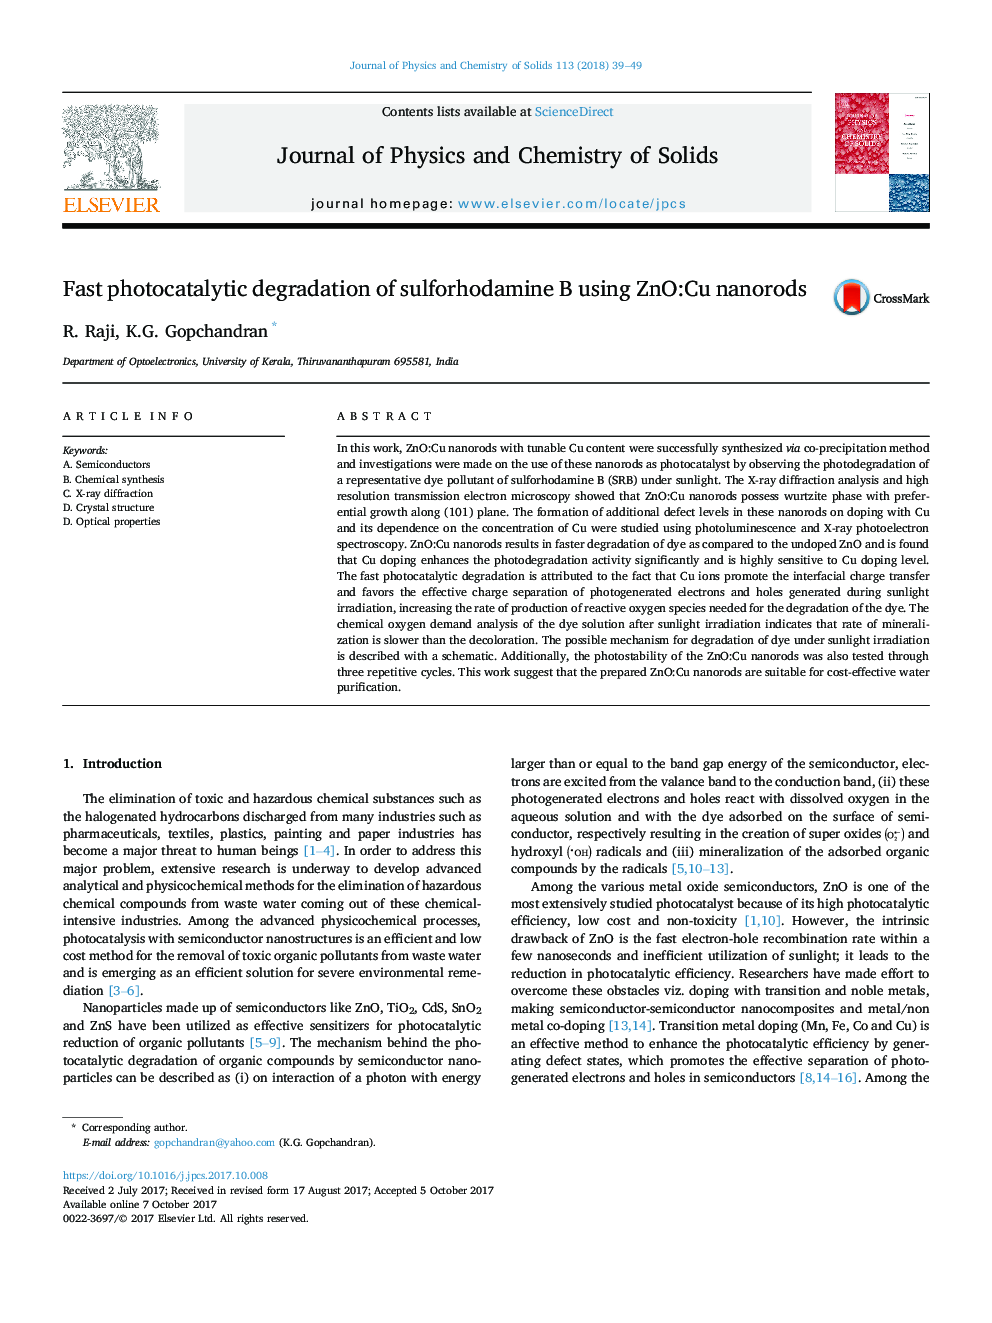 Fast photocatalytic degradation of sulforhodamine B using ZnO:Cu nanorods